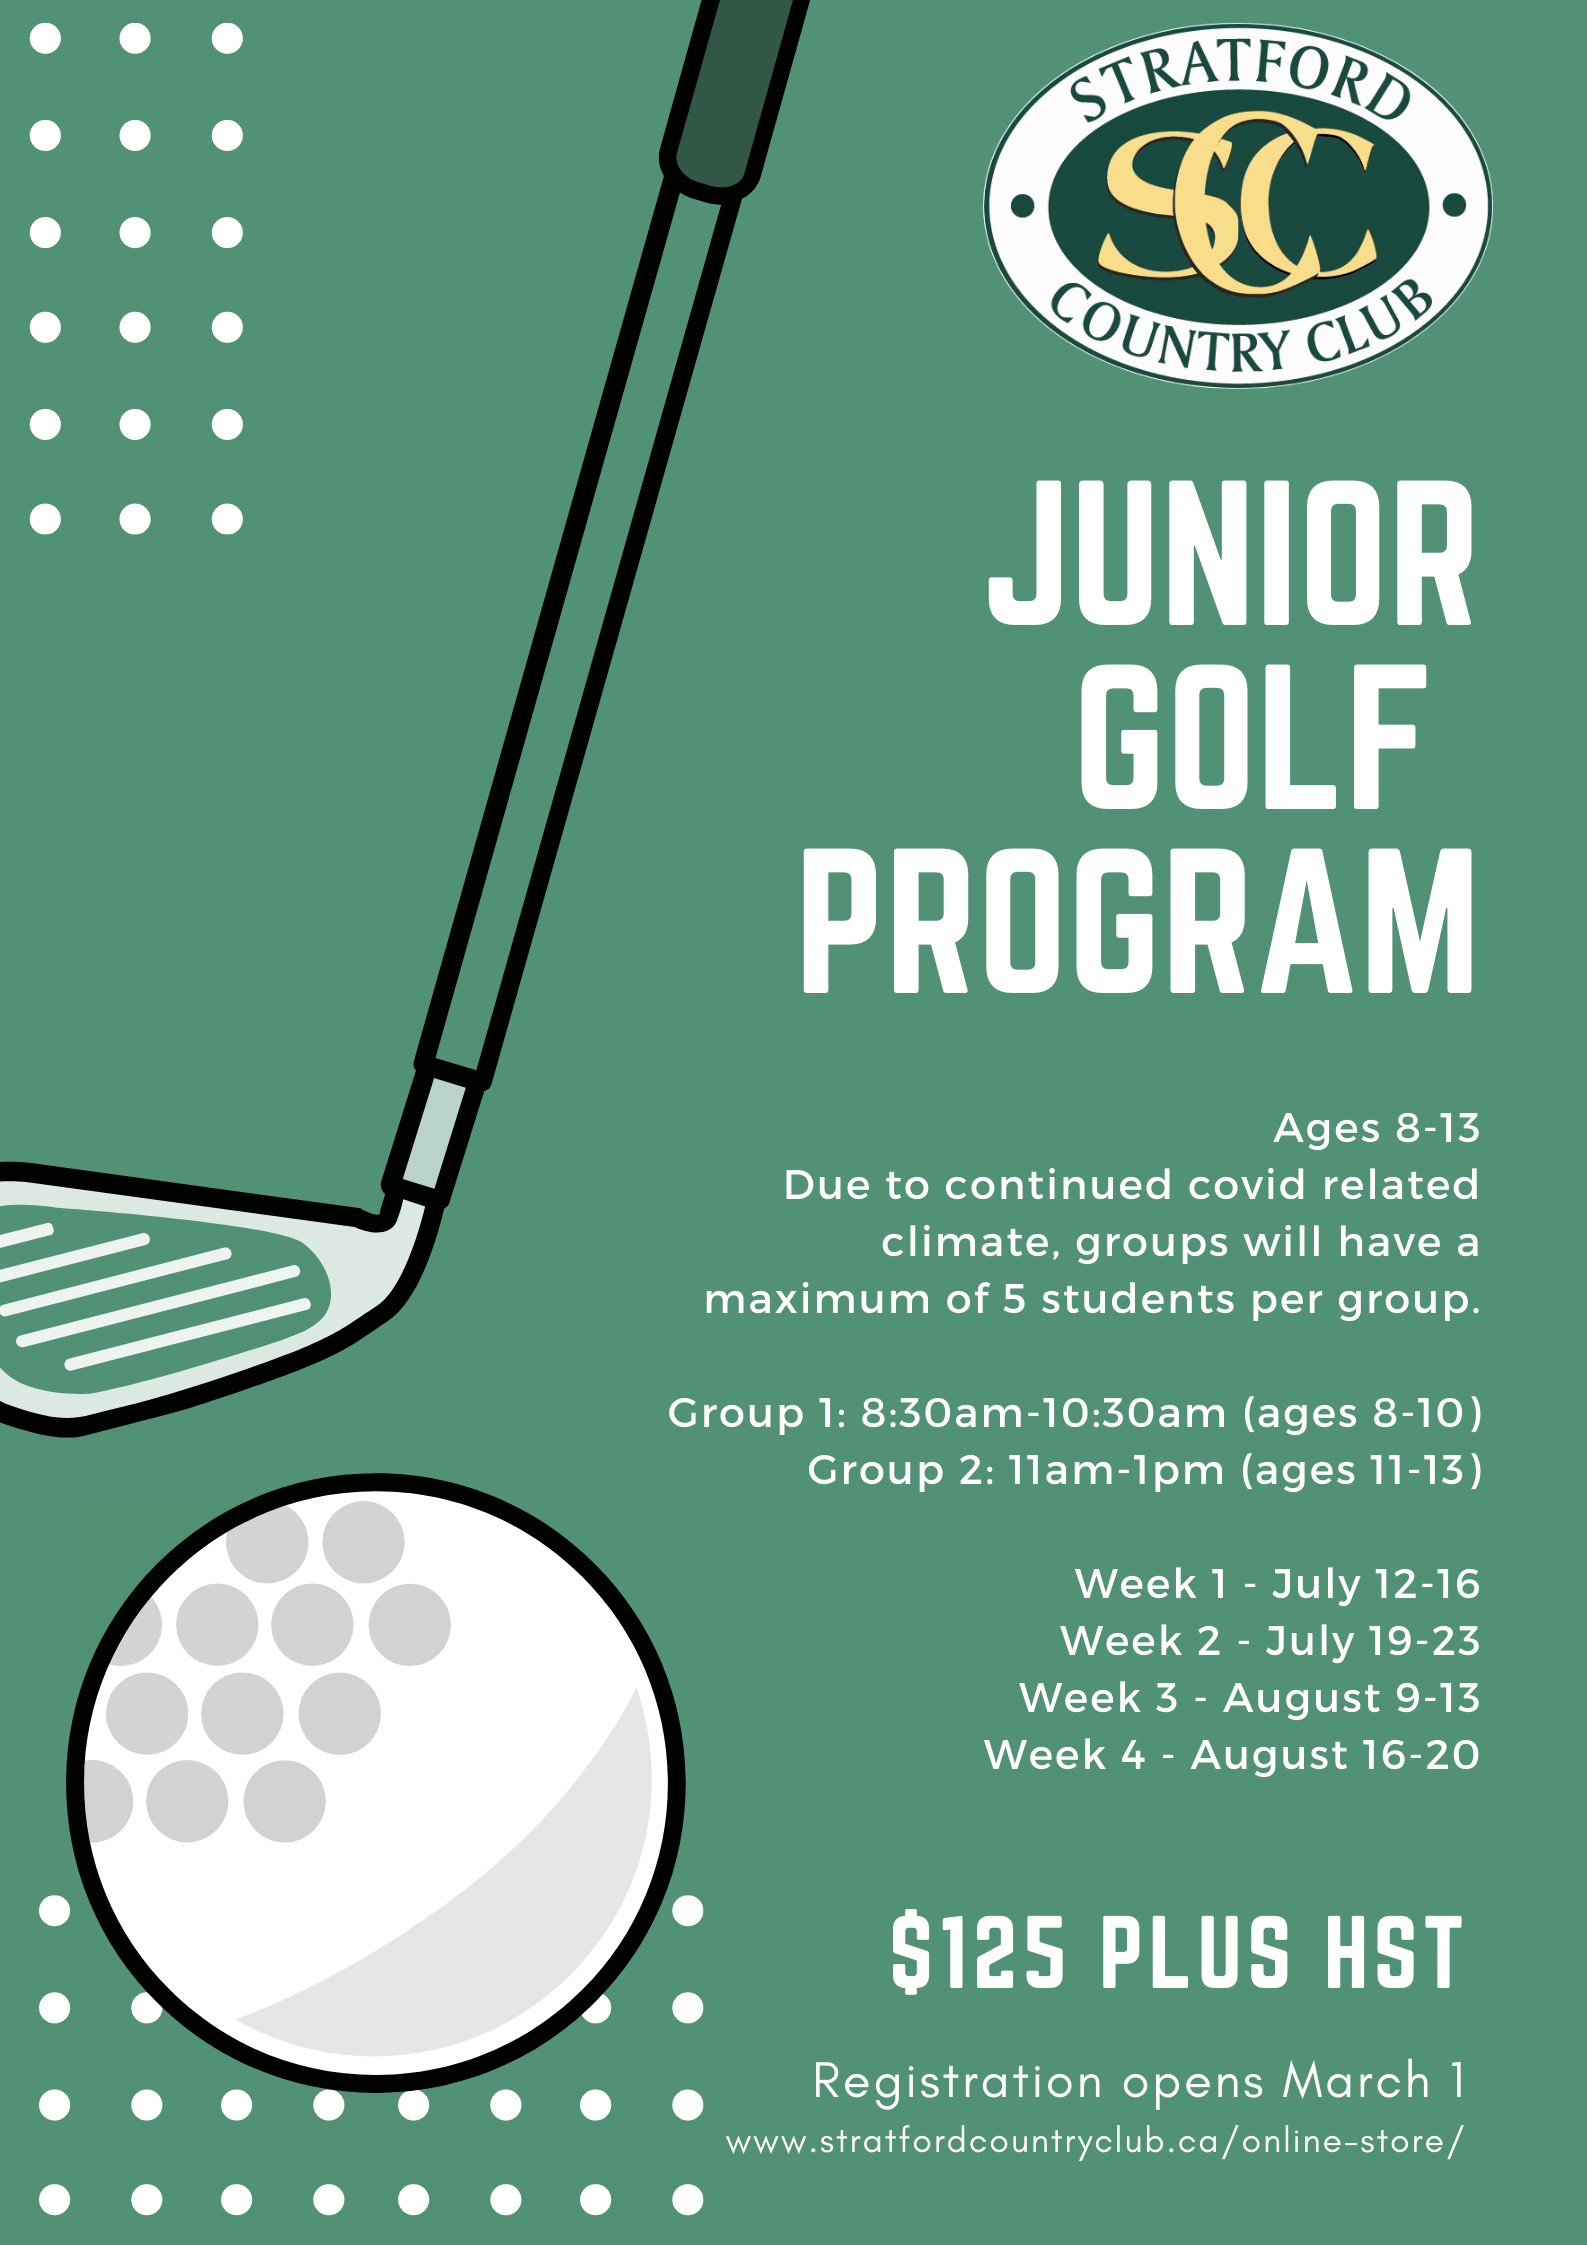 Junior Golf Program Stratford Country Club